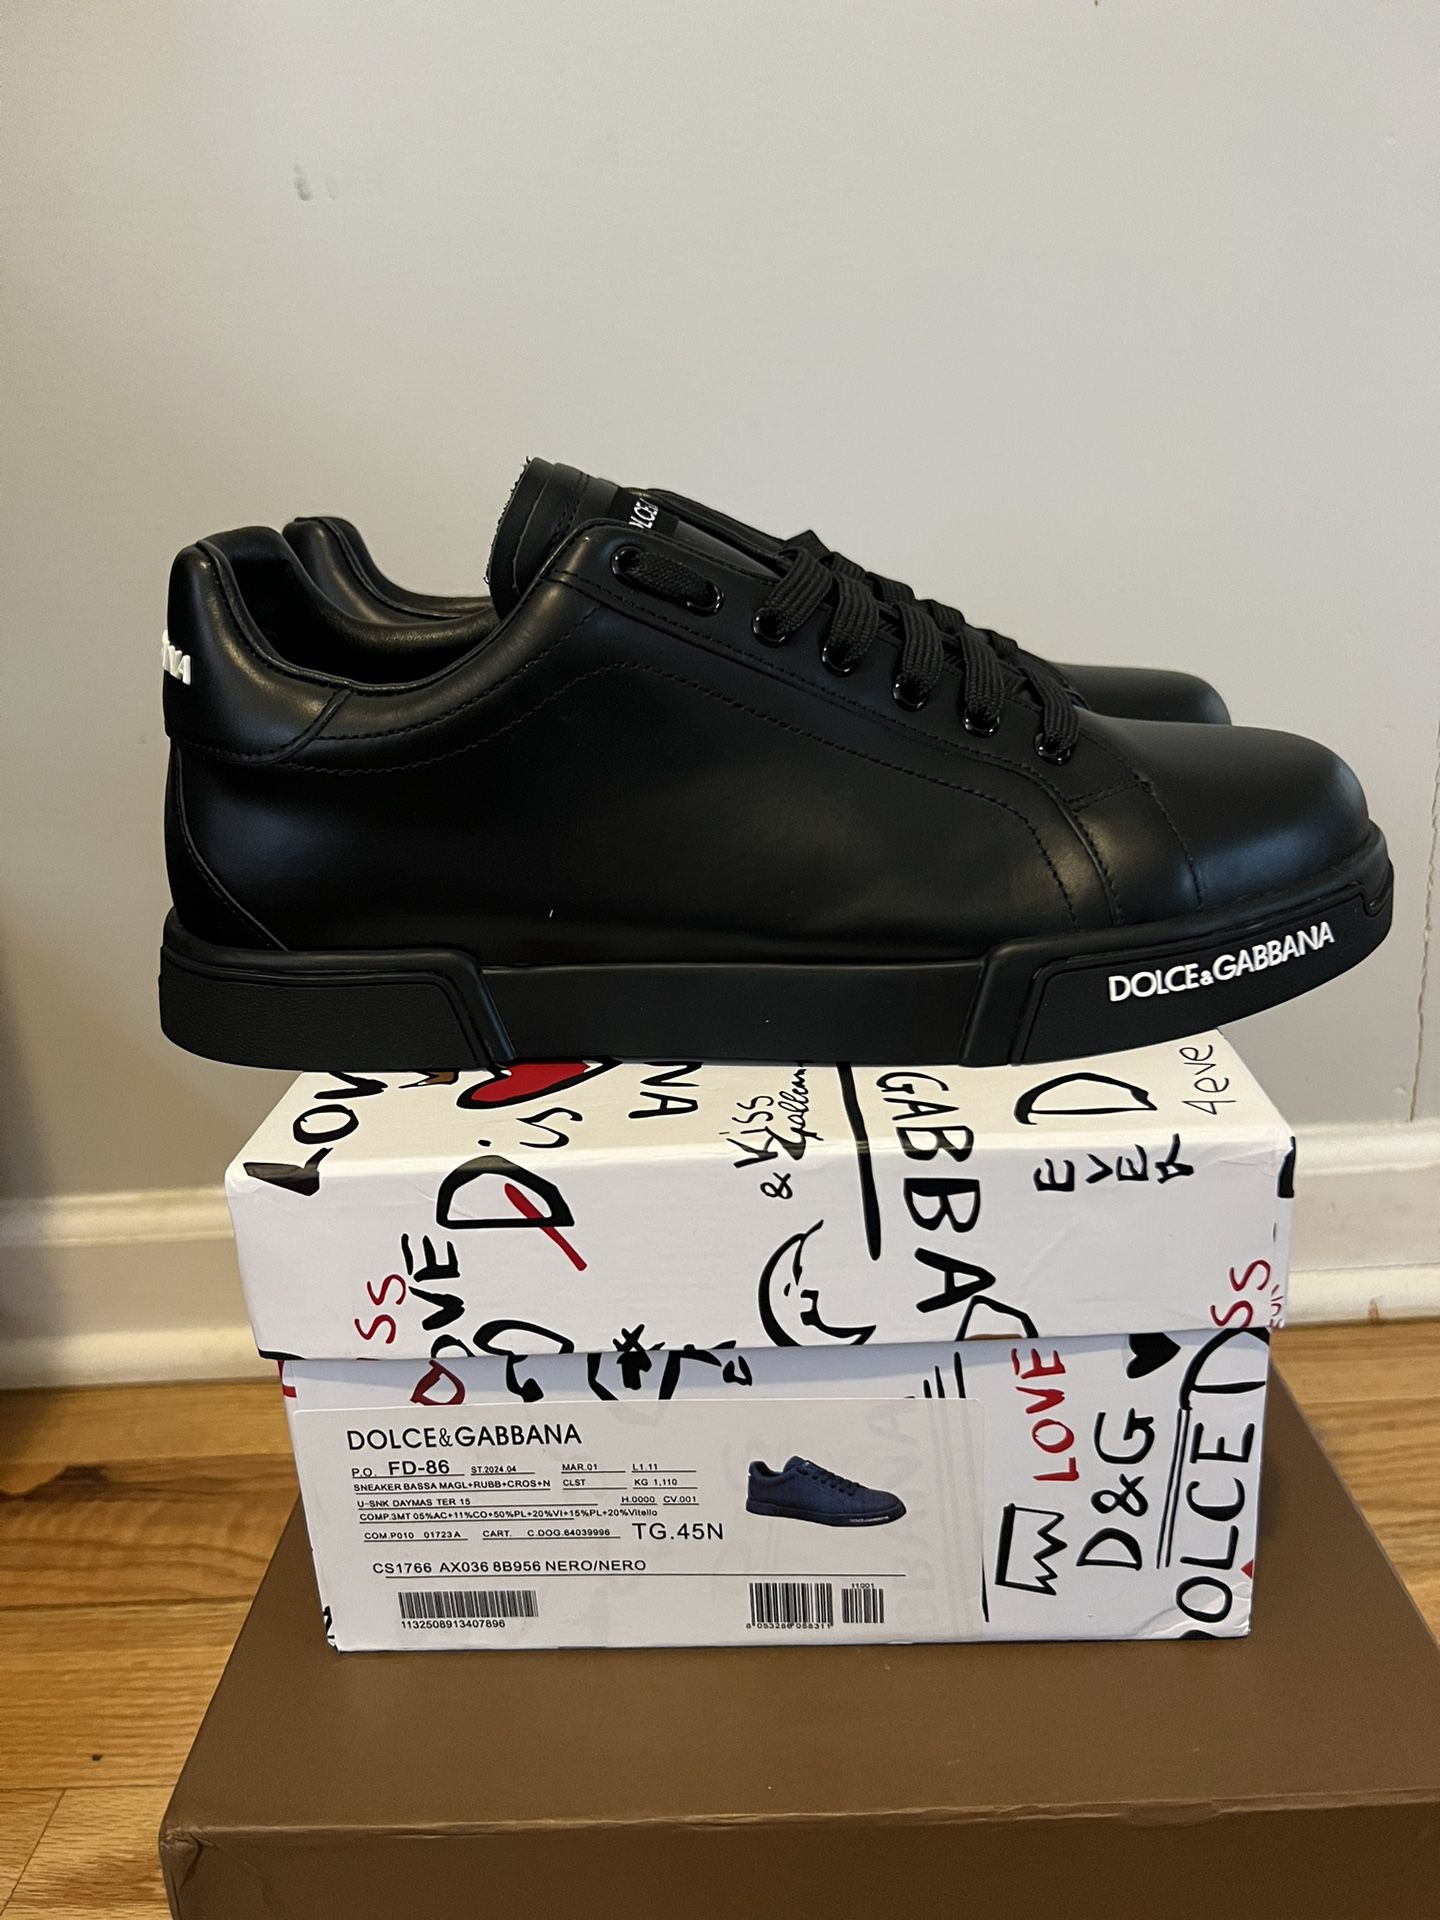 Dolce Gabbana Sneakers Size 10 Brand New Jordan